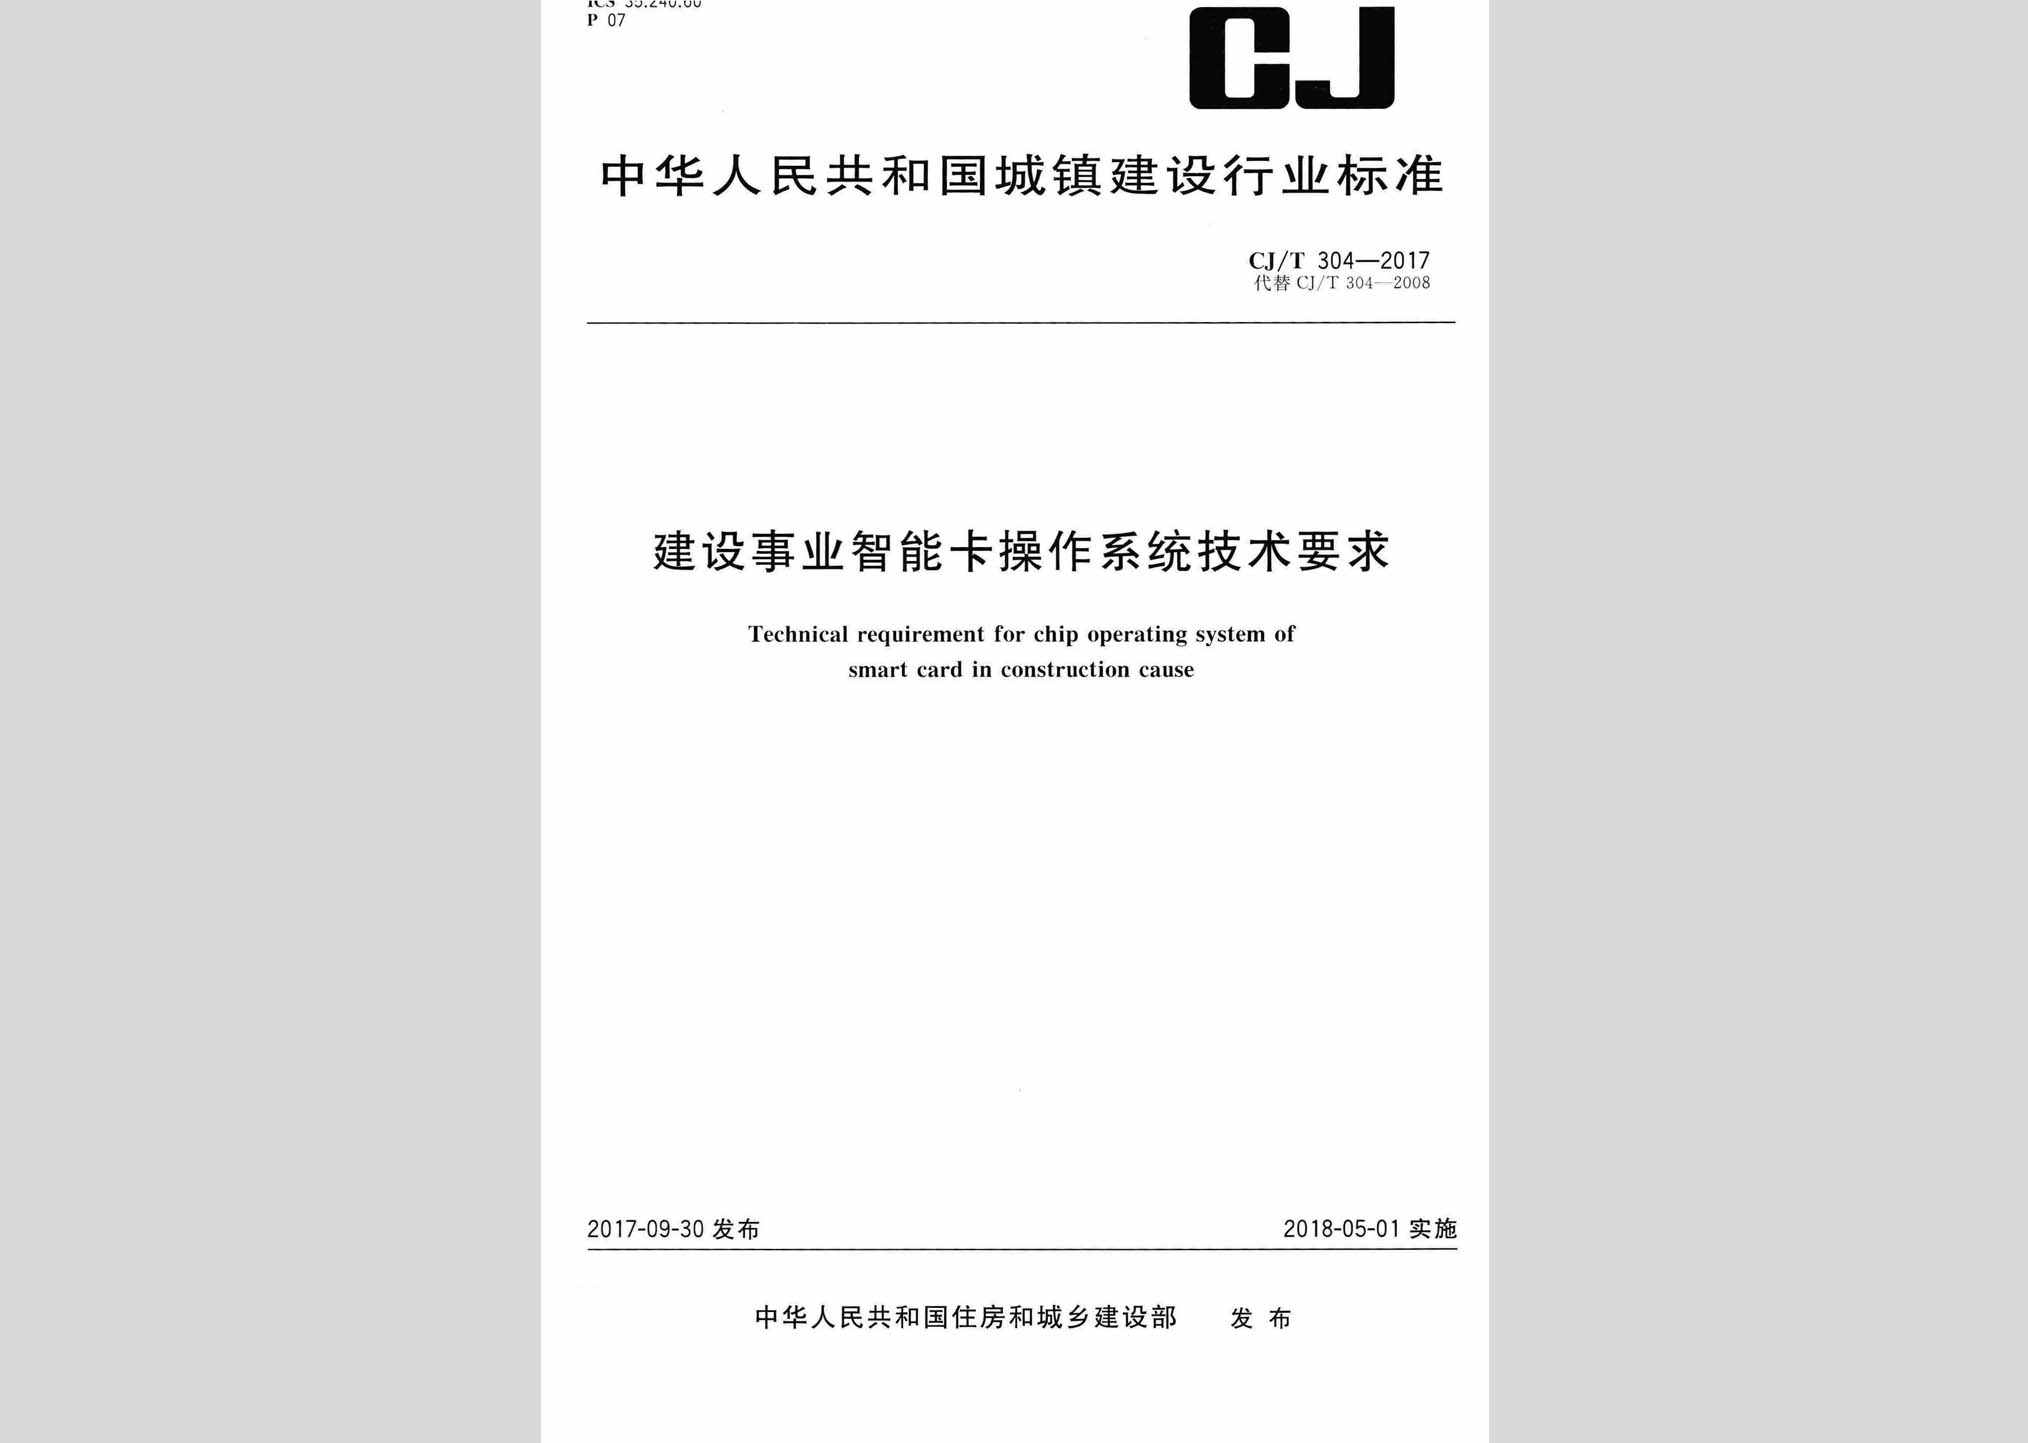 CJ/T304-2017：建设事业智能卡操作系统技术要求